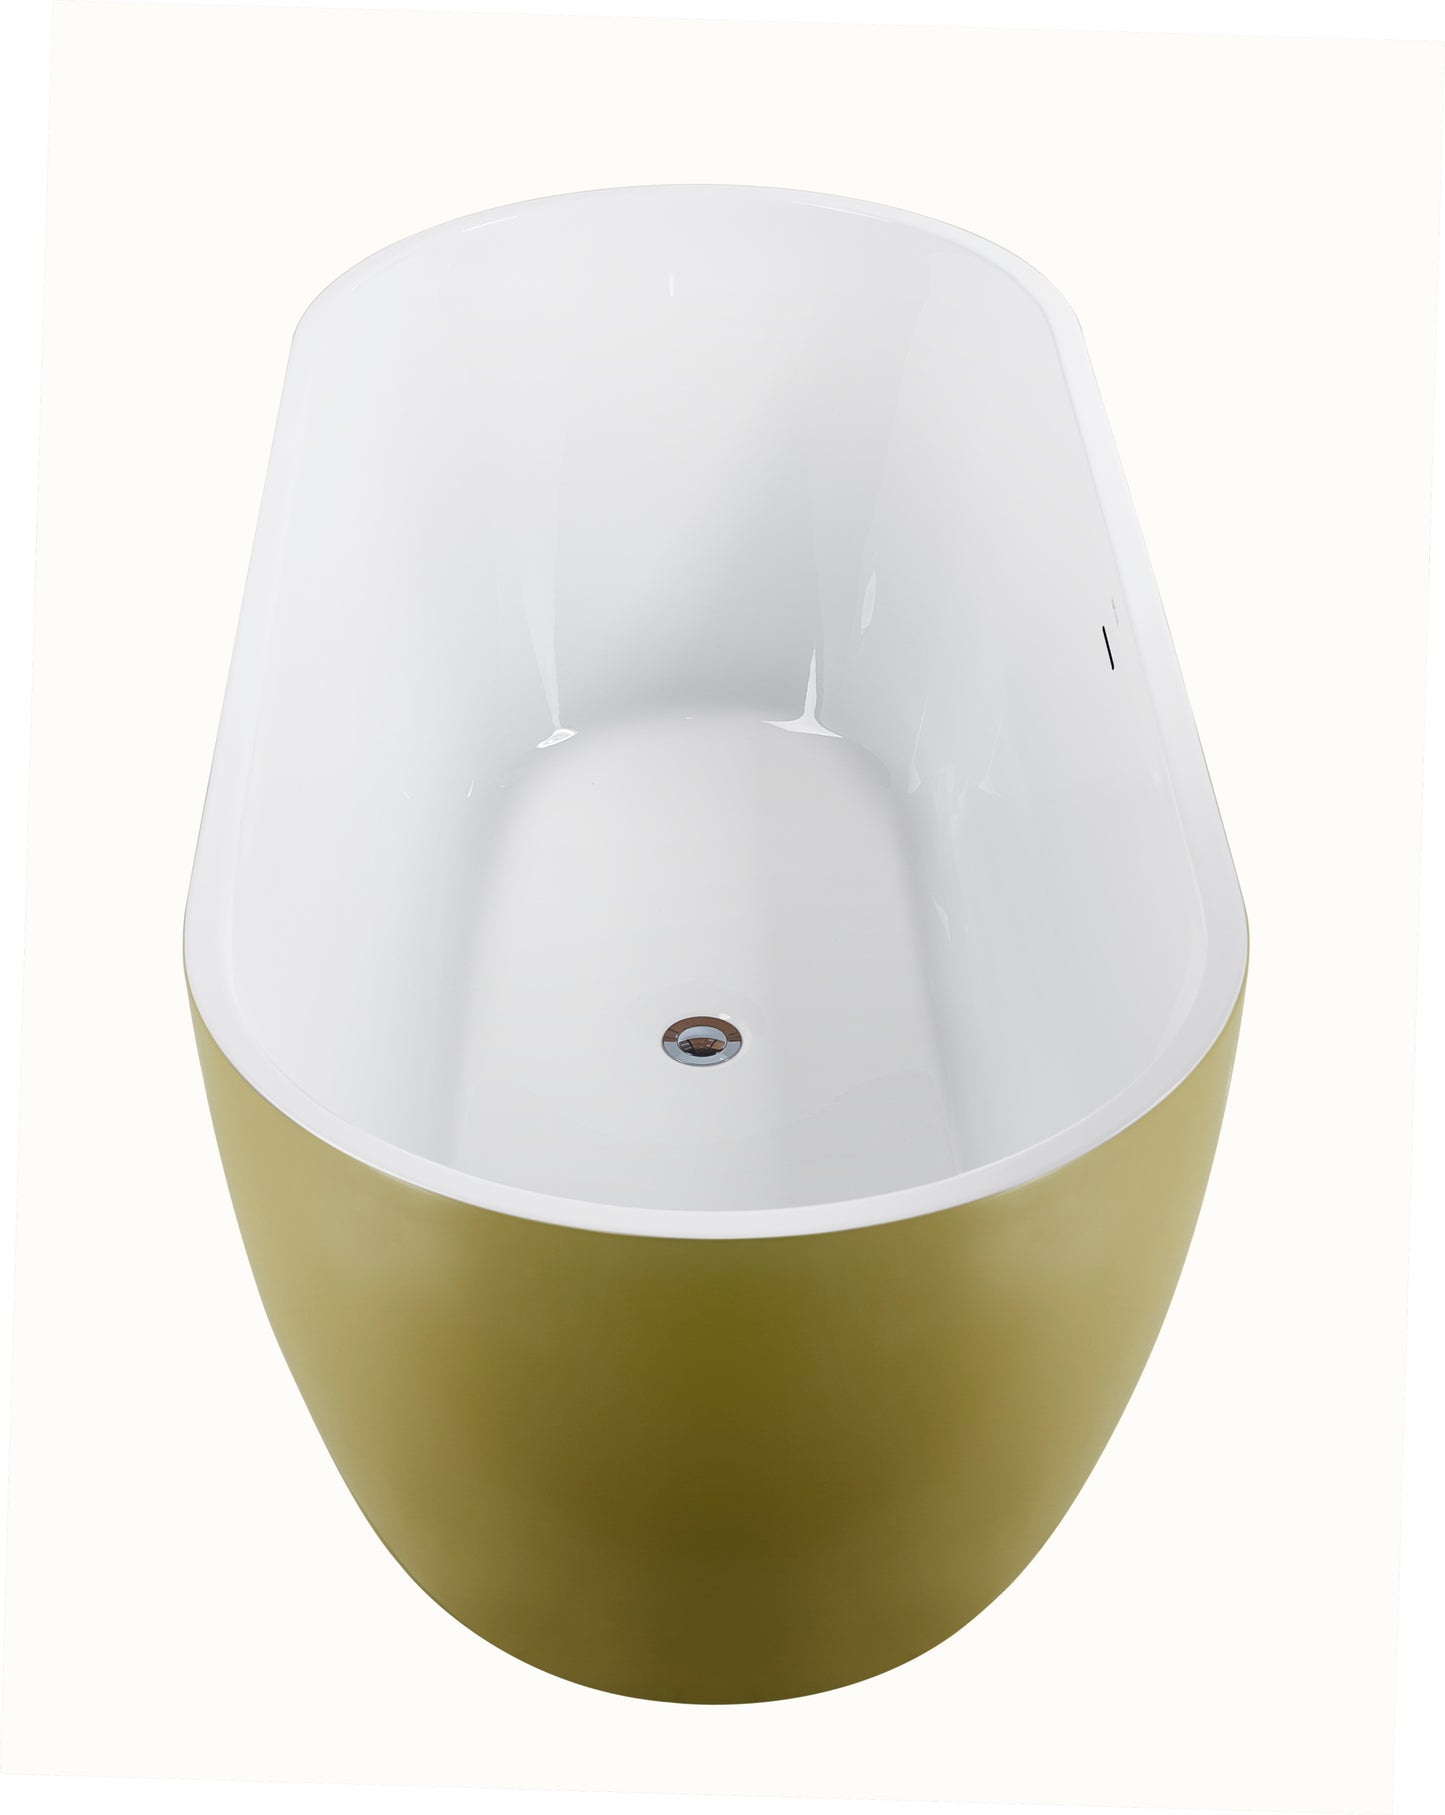 65" 100% Acrylic Freestanding Bathtub，Contemporary Soaking Tub，White inside and gold outside